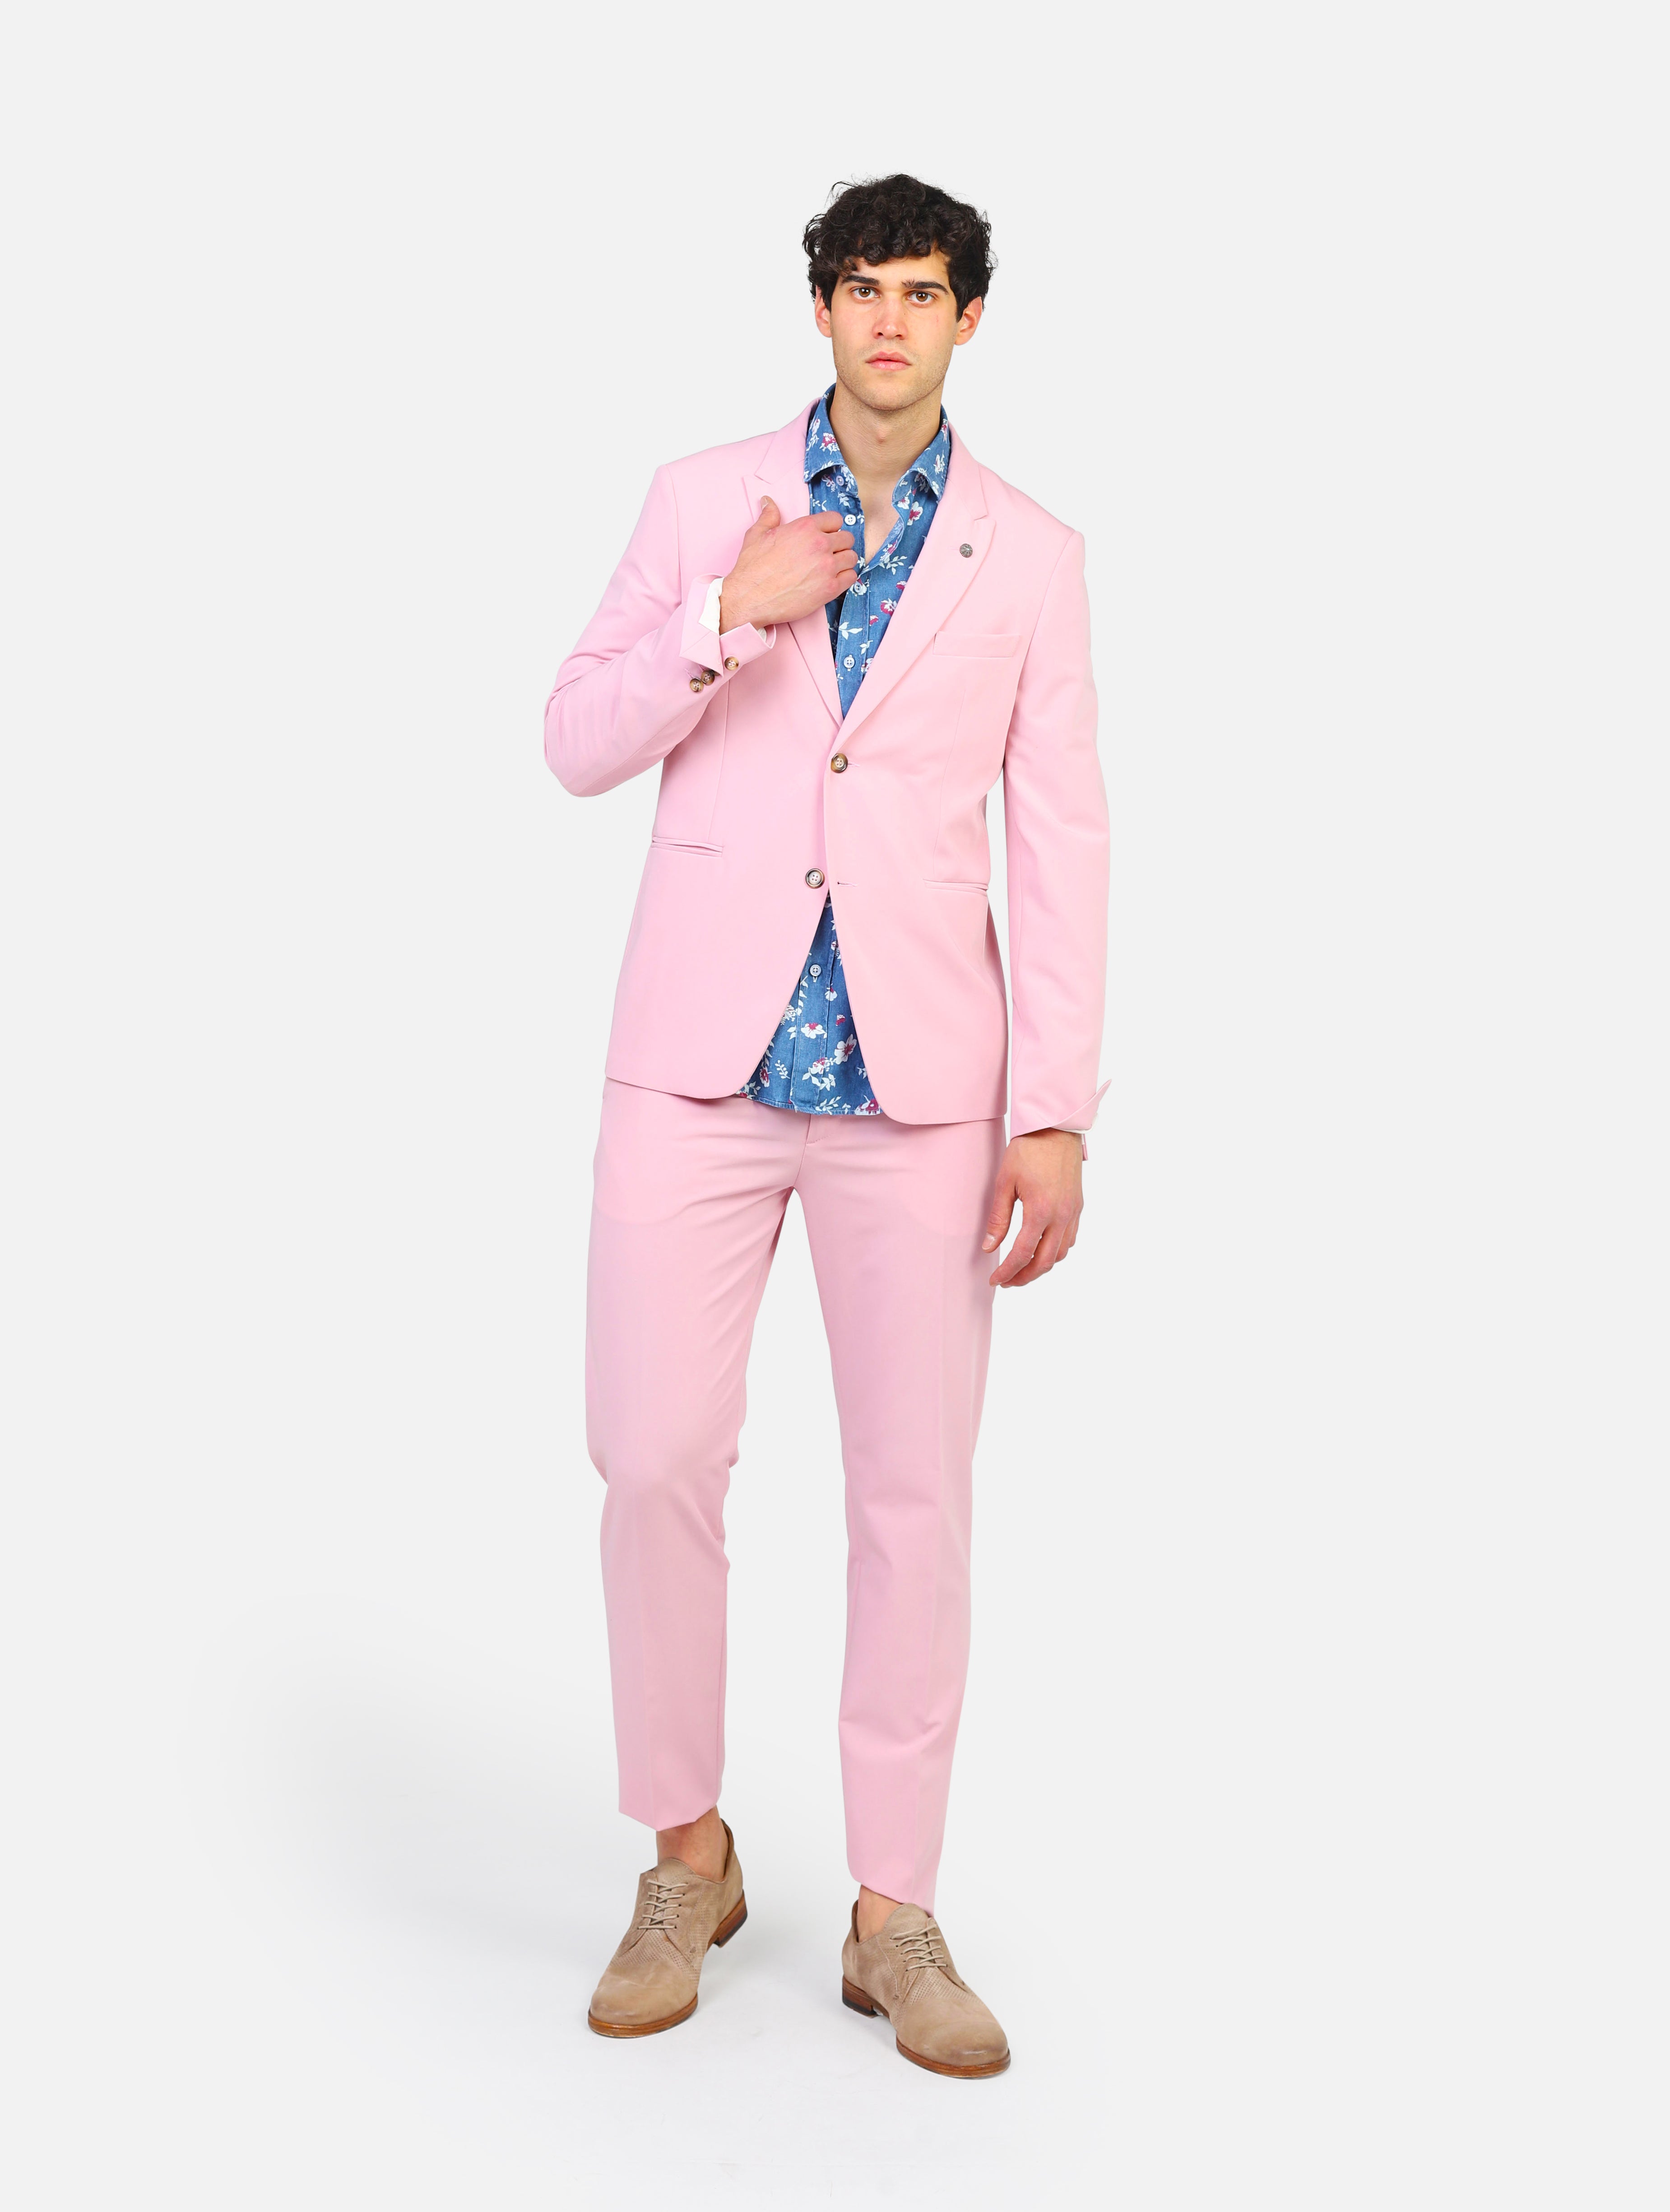 Giacca con pantalone officina 36 - 9001 alexis rosa rosa man  - 1